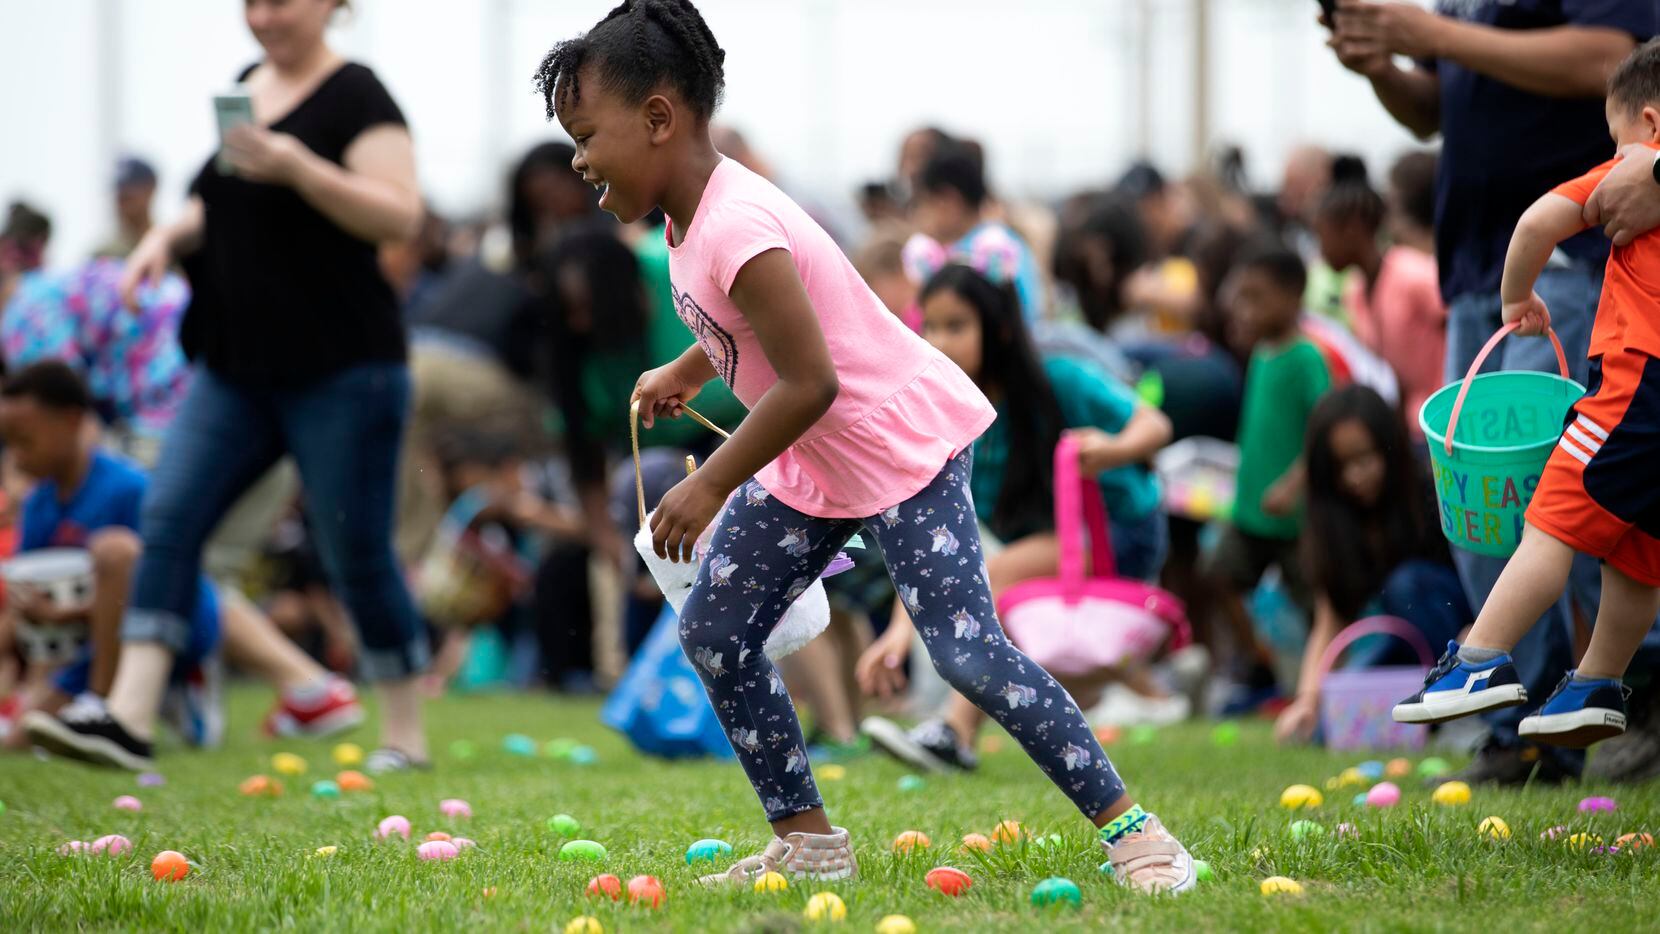 Korah Abram, 7, participates in the annual Cedar Hill Easter egg hunt.